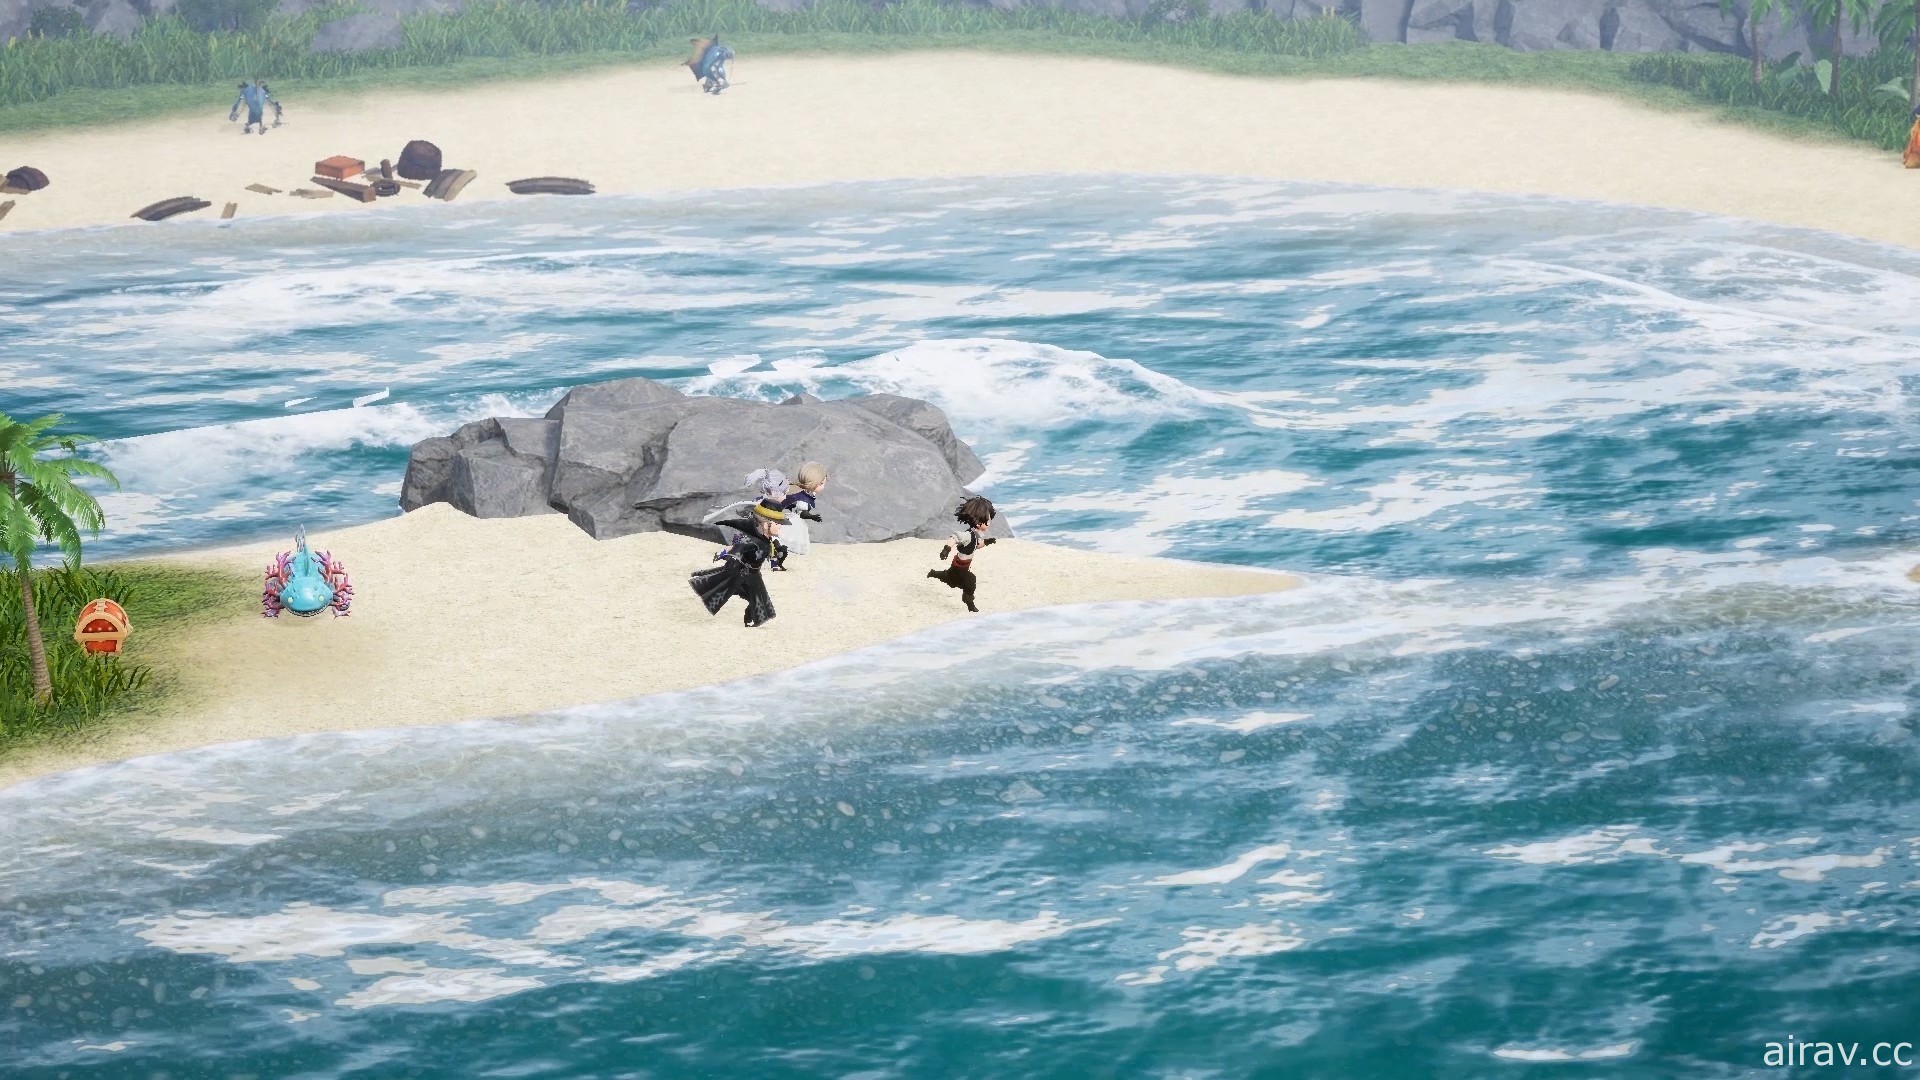 《Bravely Default II》今日正式发售 回顾世界观与主要游戏系统